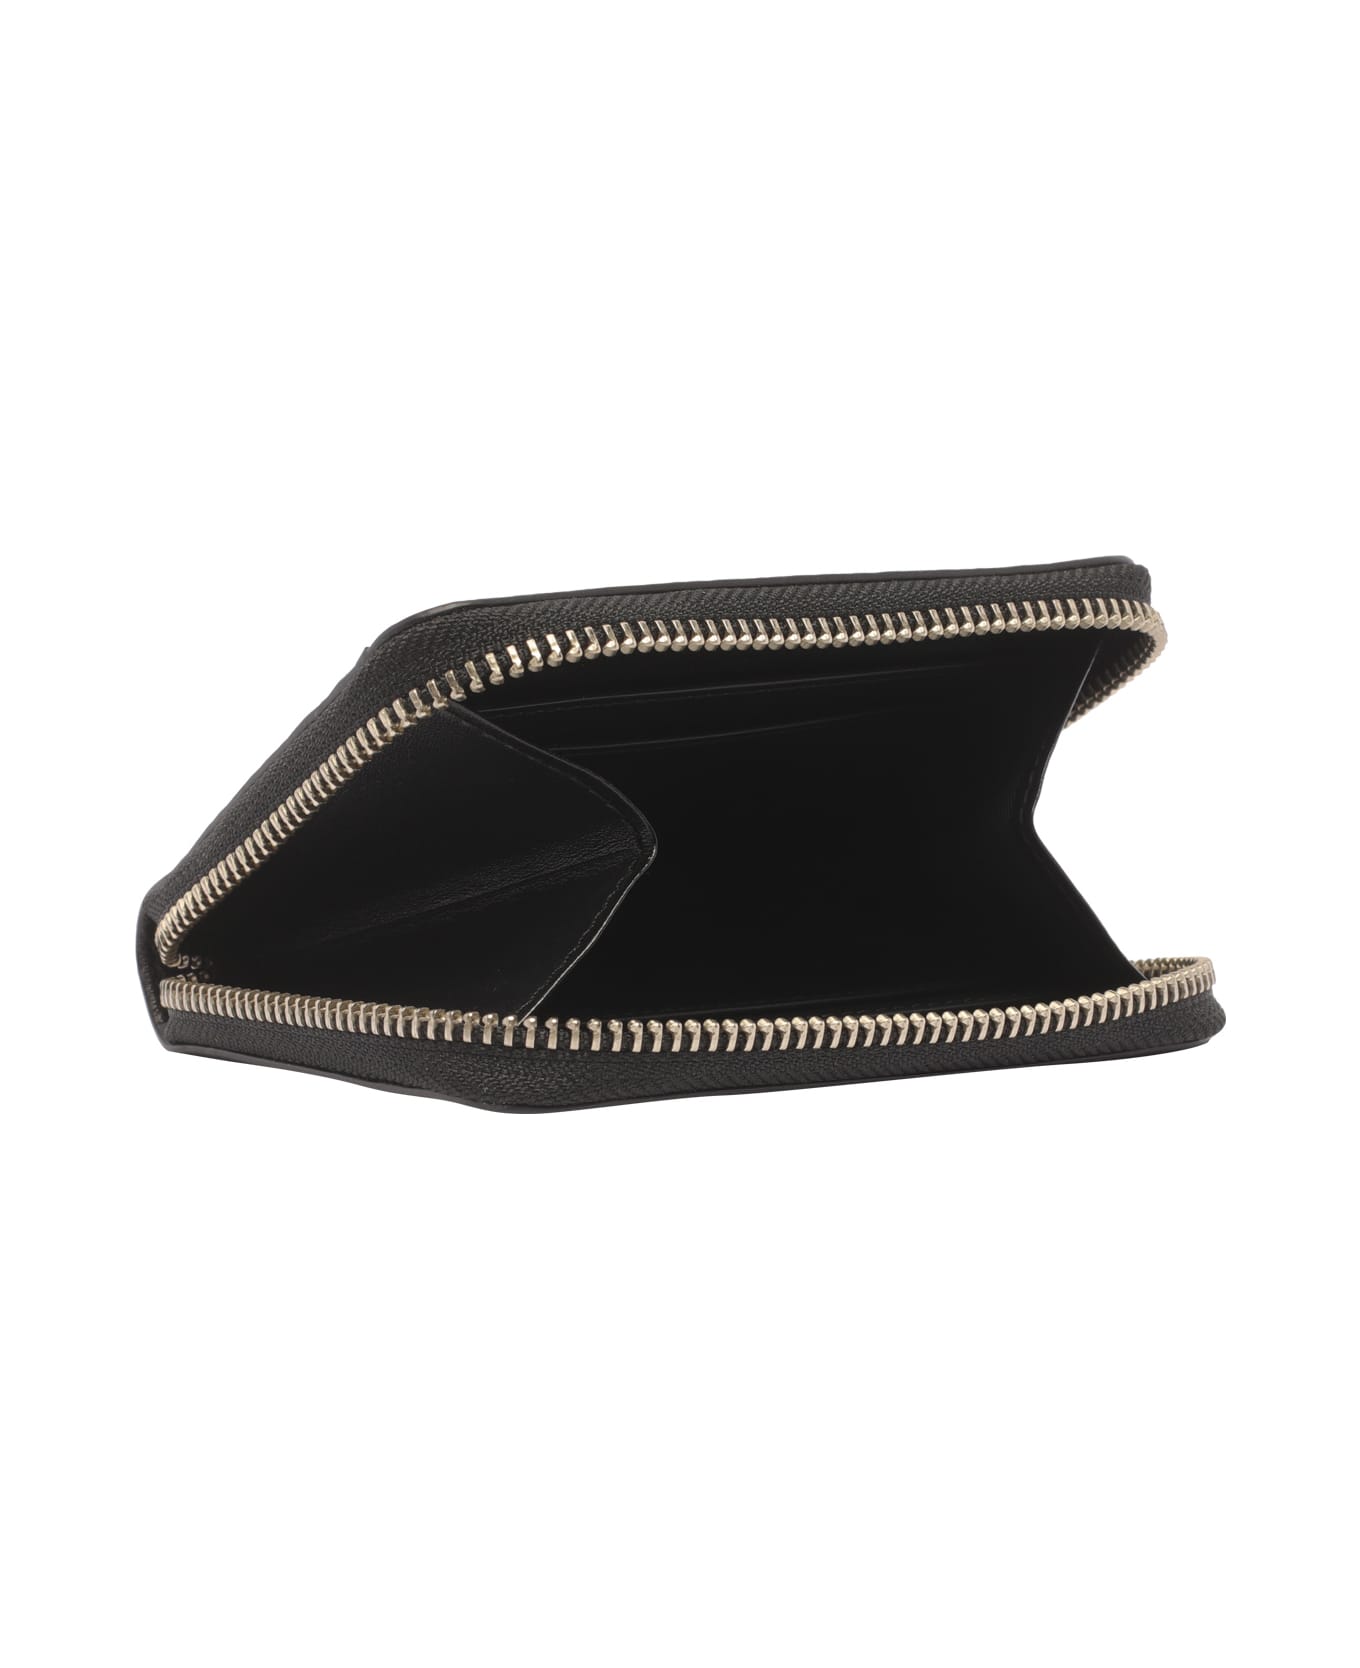 Marc Jacobs The Monogram Leather Zip Around Wallet - Black White